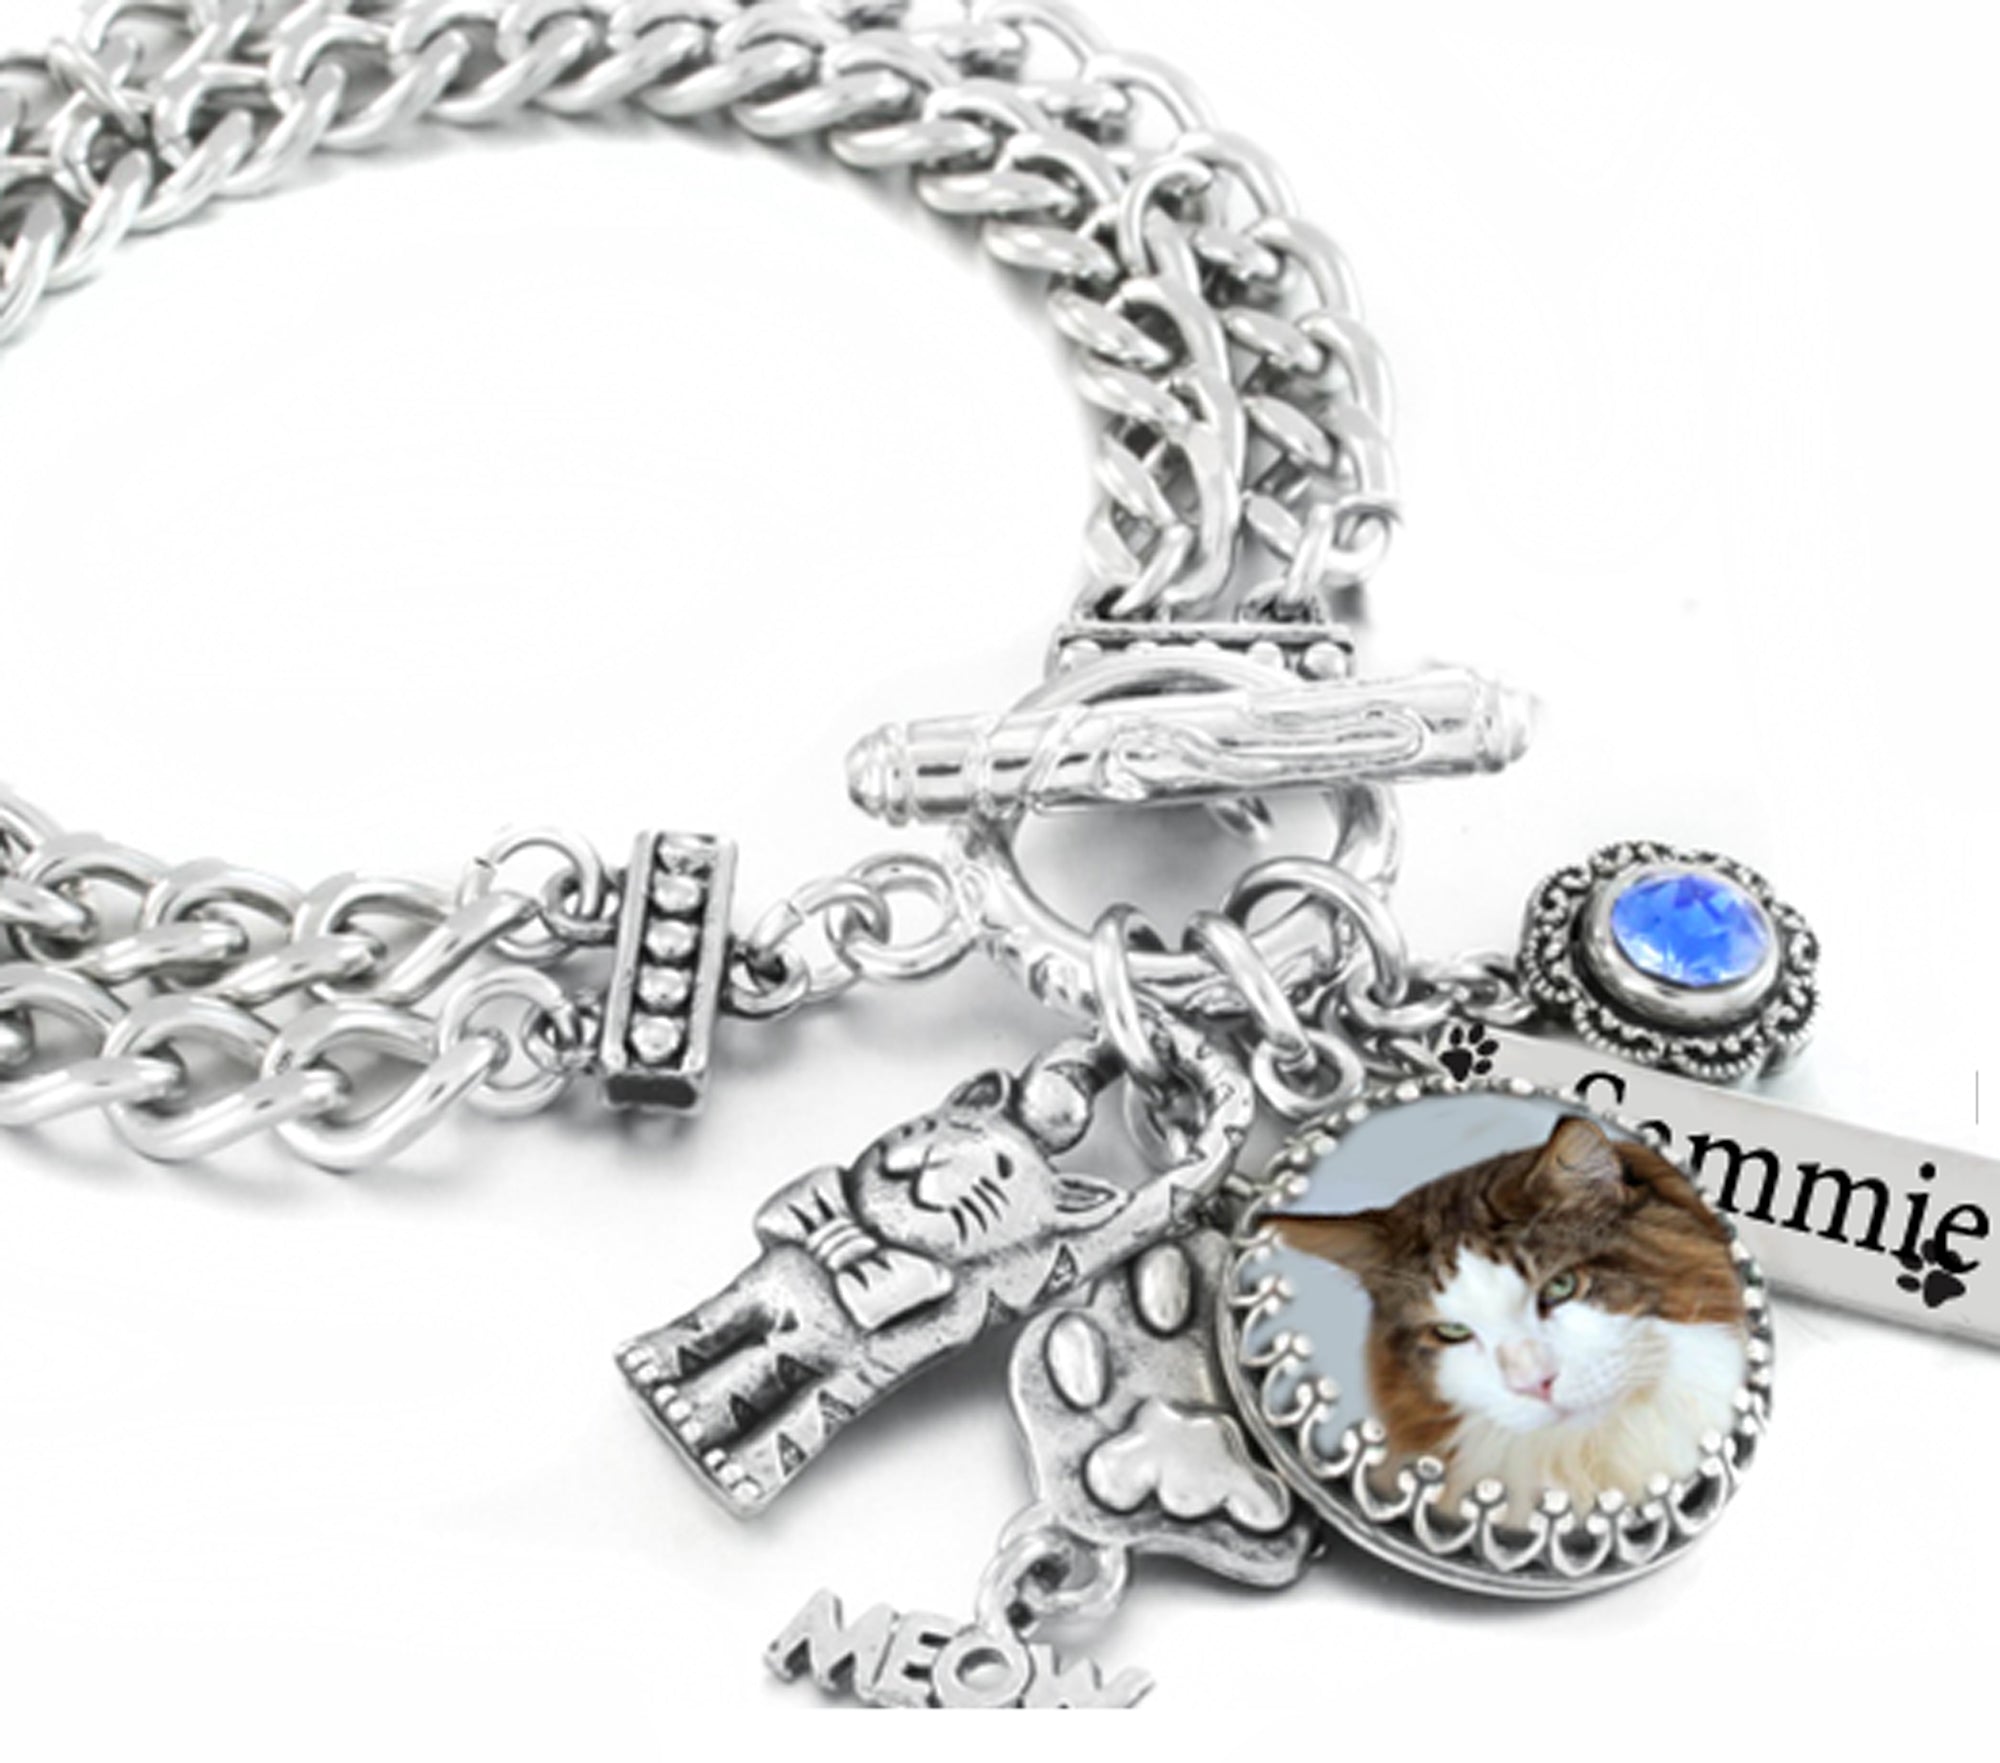 Personalized Cat Charm Bracelet - Blackberry Designs Jewelry